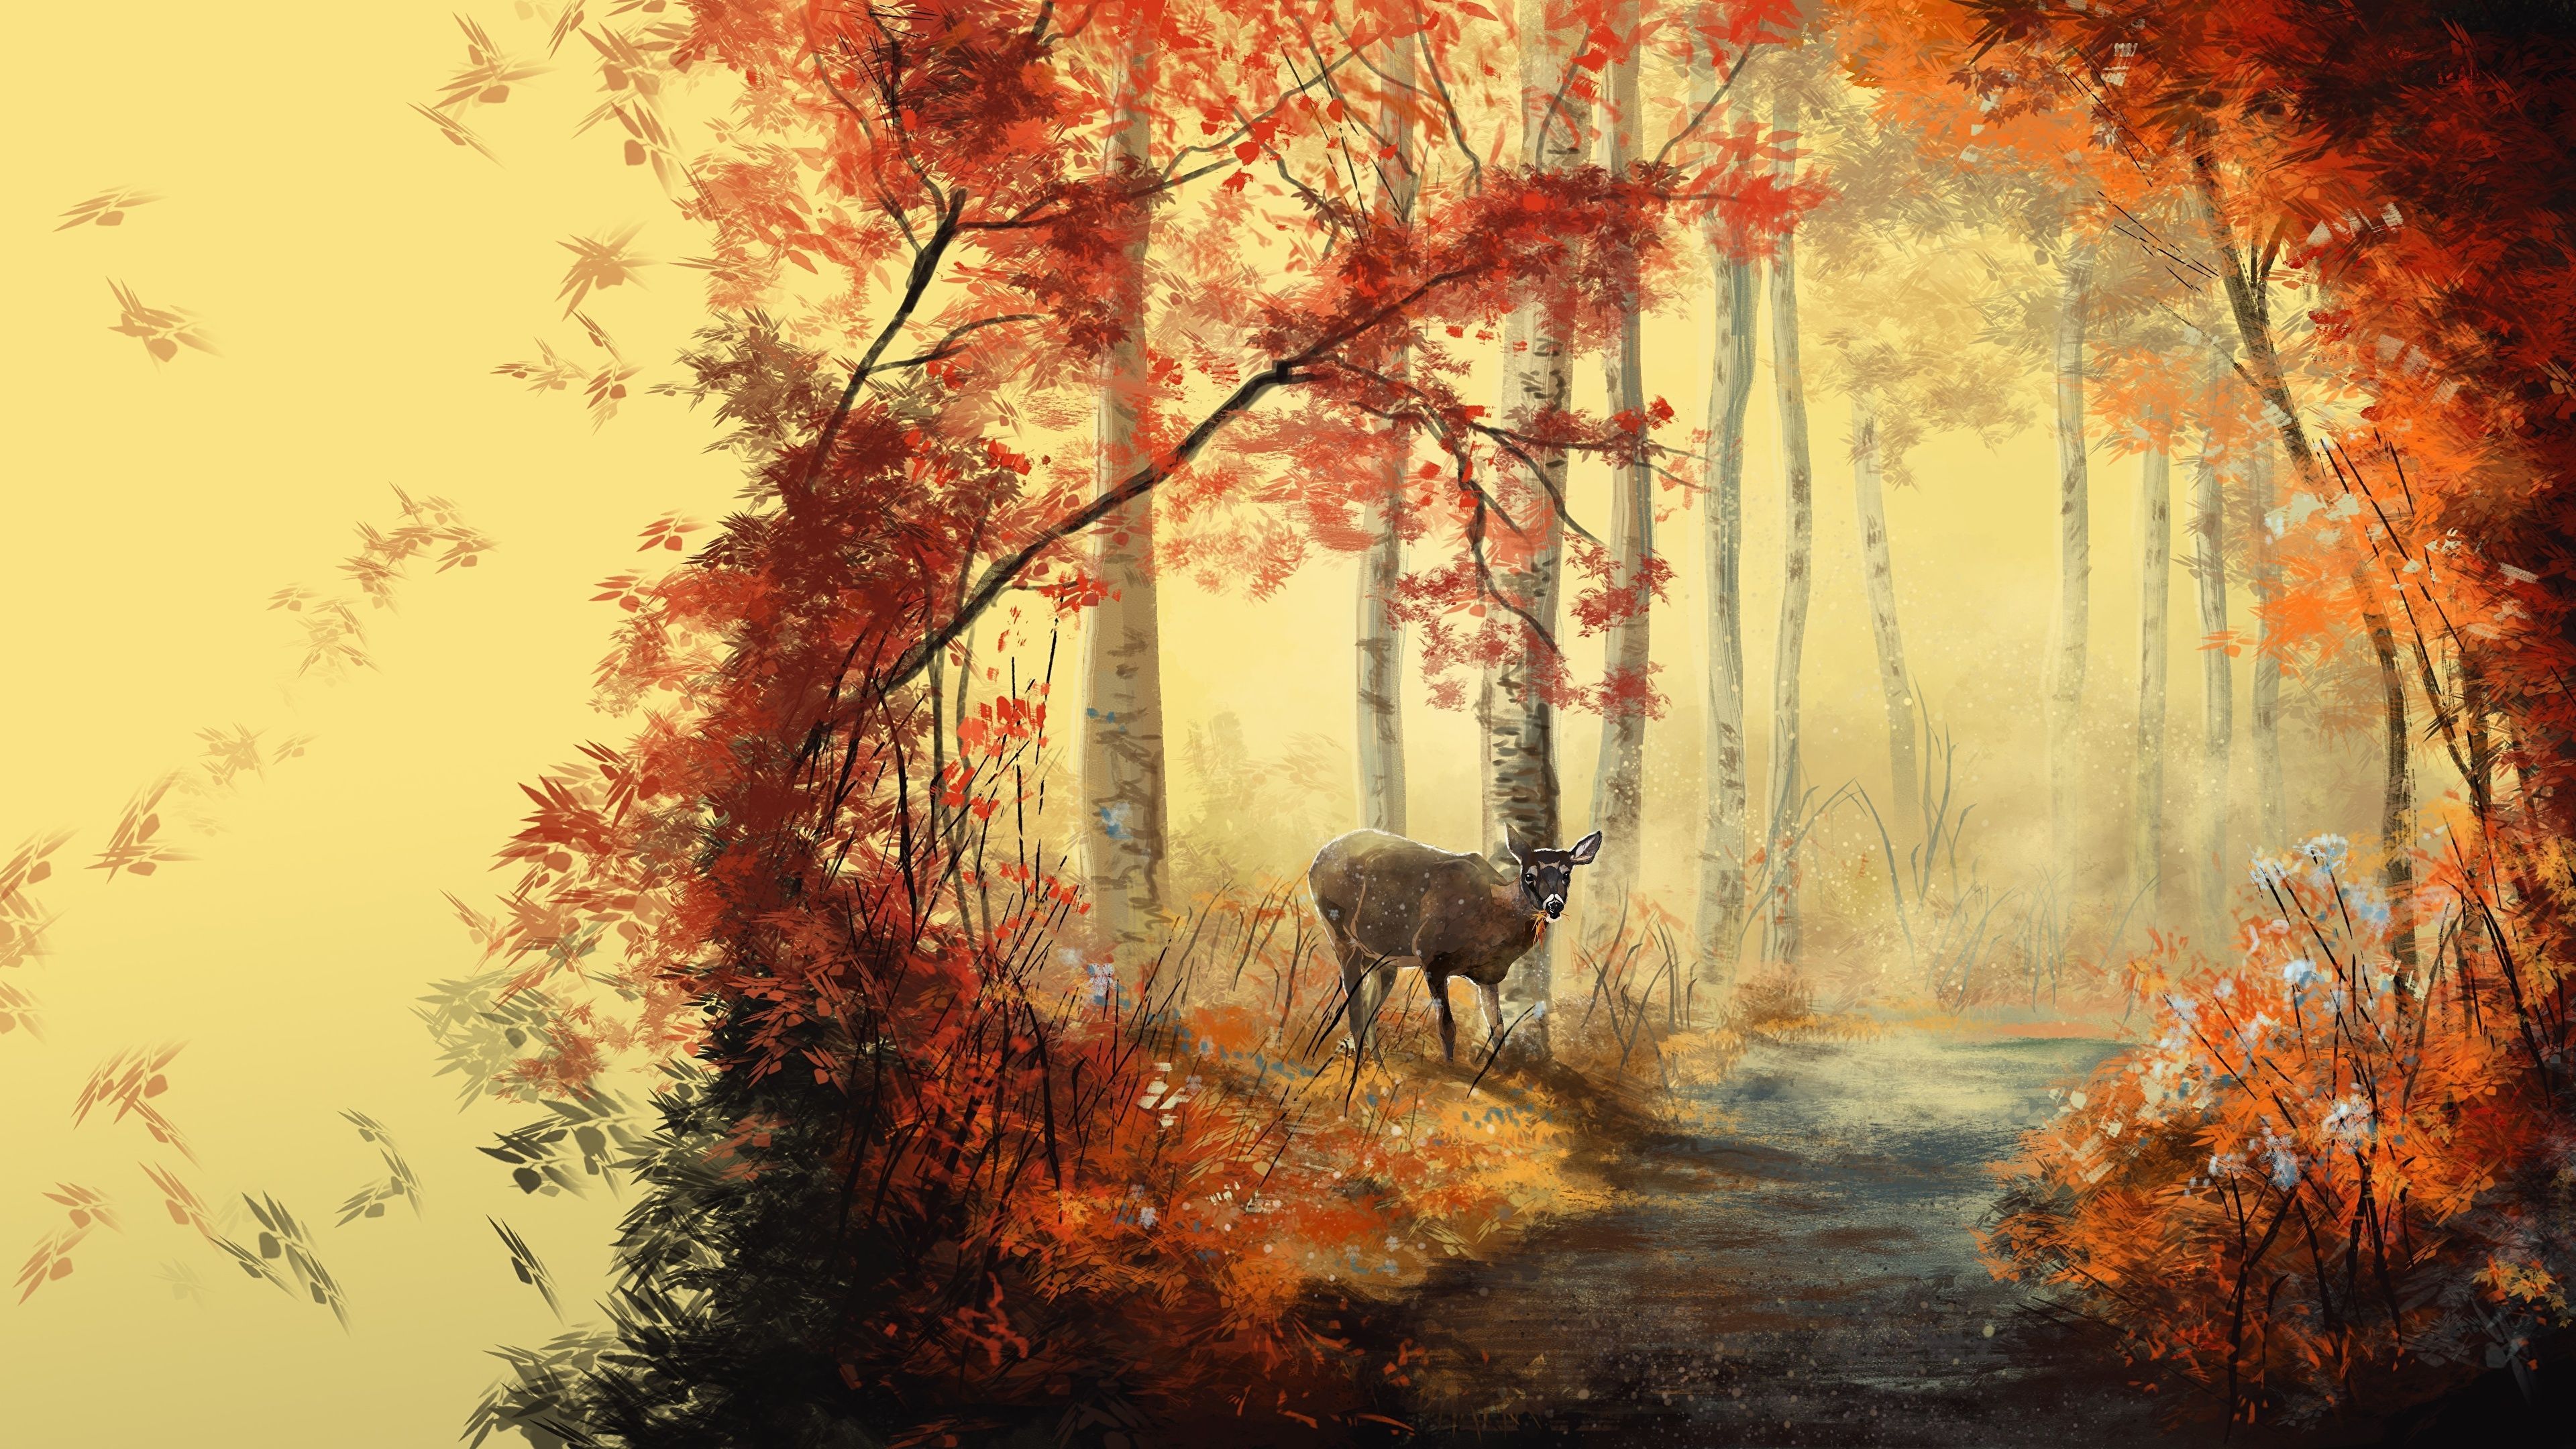 Autumn Animal Painting Wallpaper Free Autumn Animal Painting Background